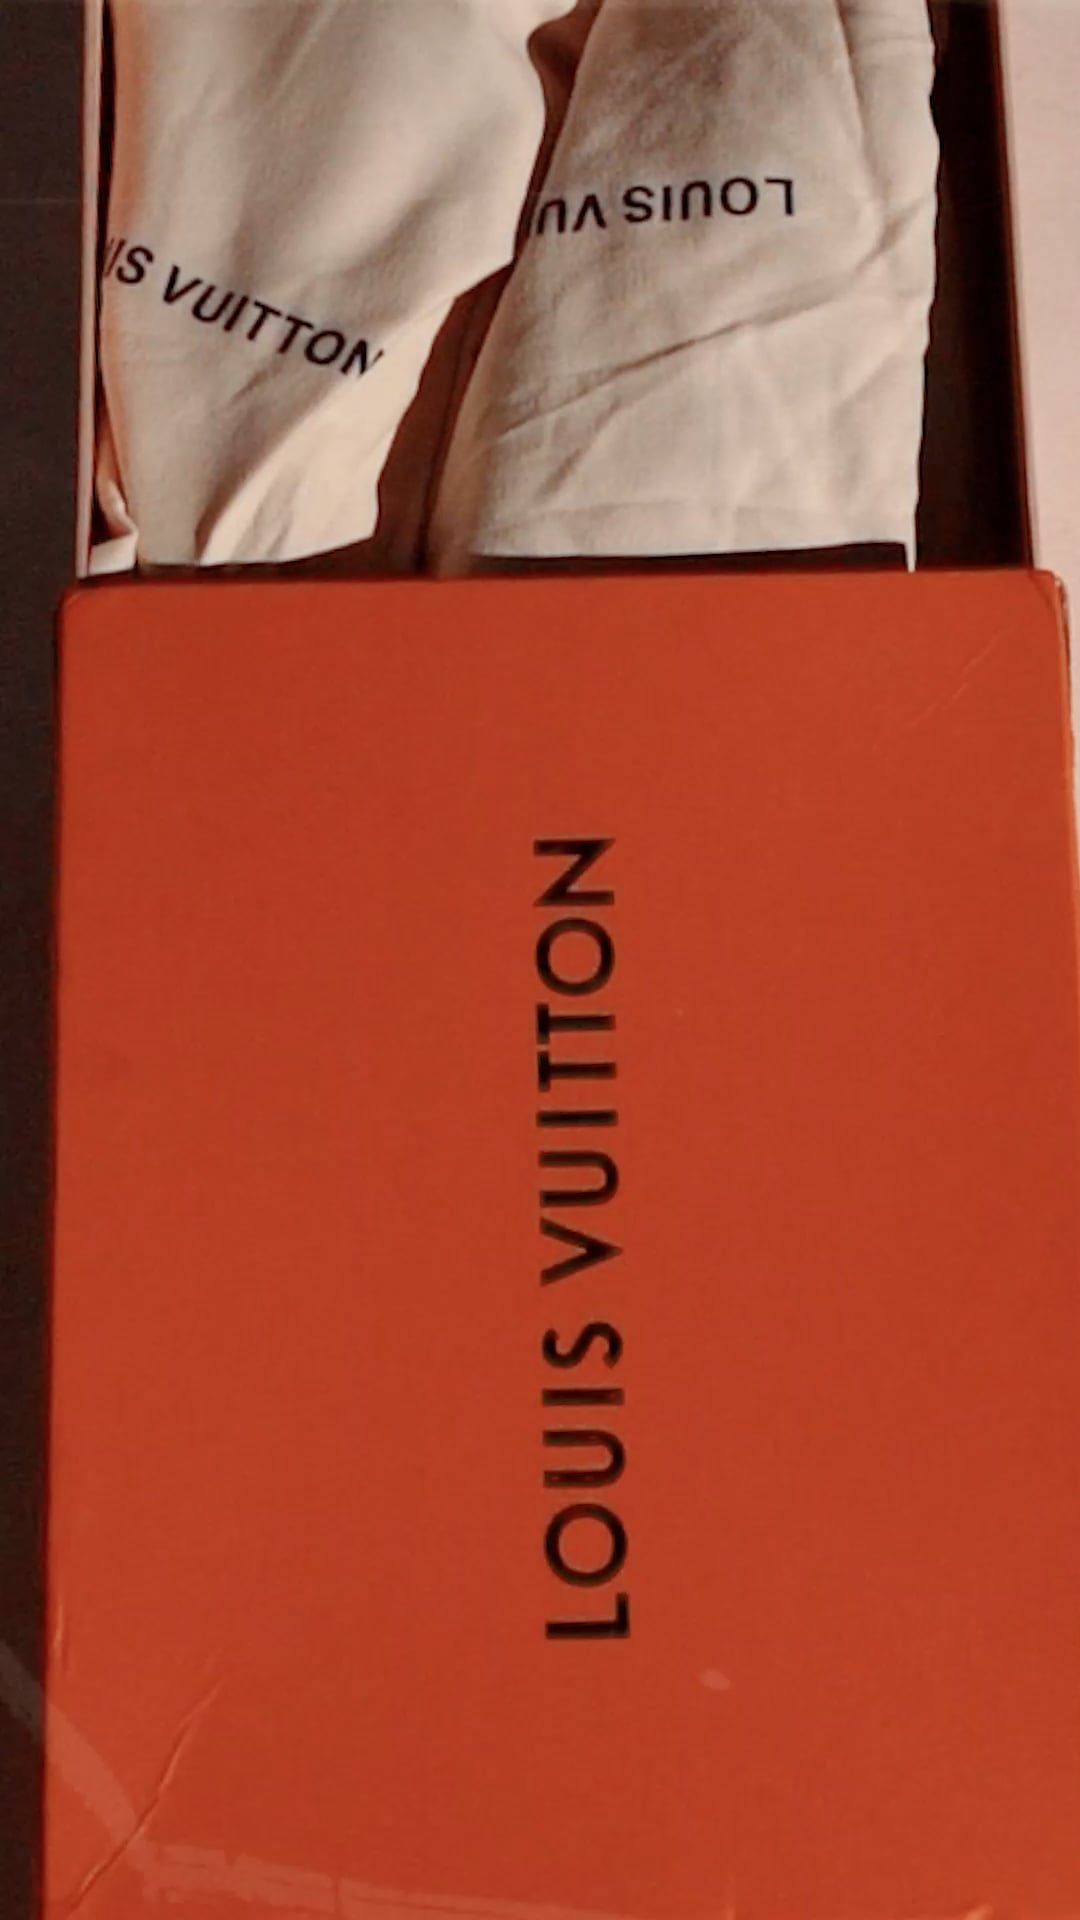 Superflat Monogram - For Louis Vuitton on Vimeo